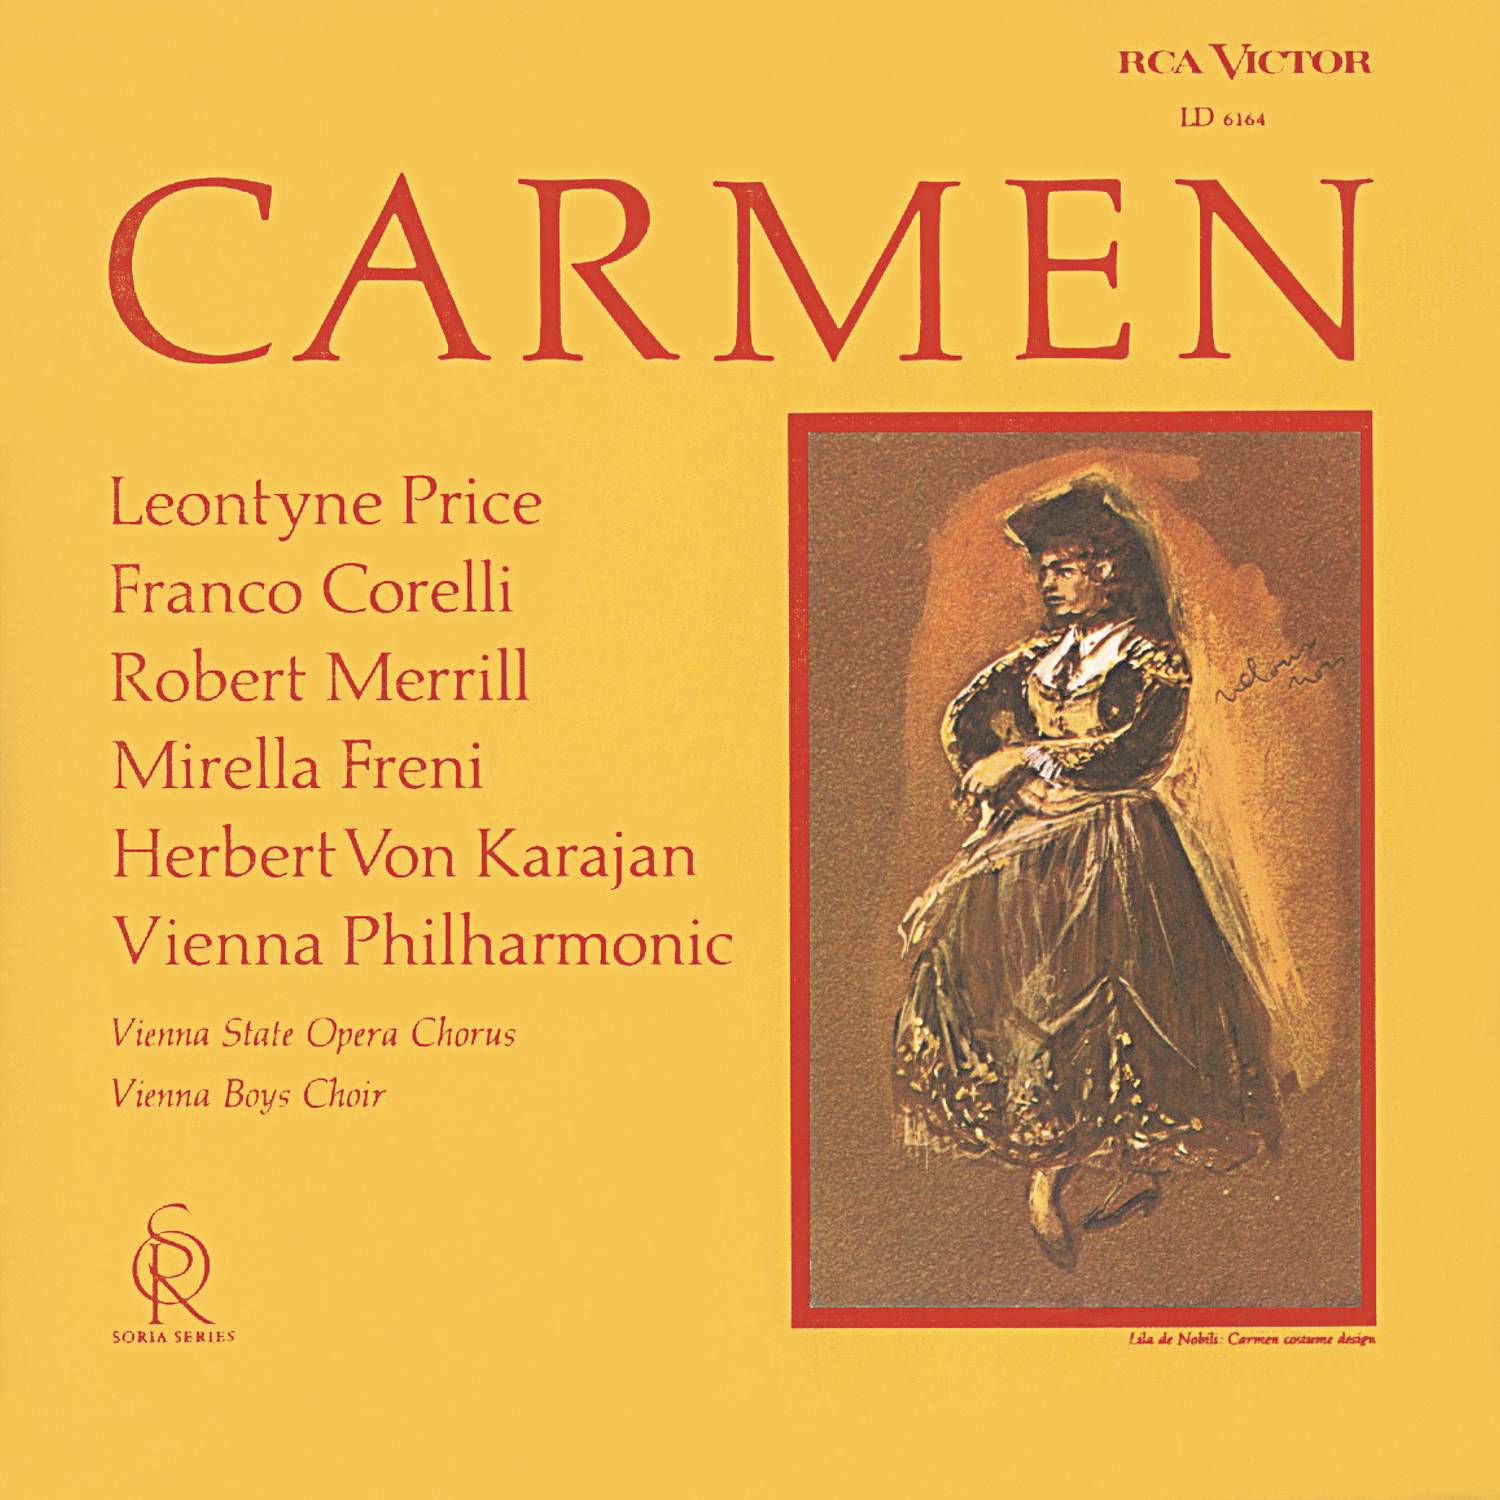 Carmen (Remastered): Act III - Je dis que rien ne m'épouvante (Micaela's Air) (2008 SACD Remastered)